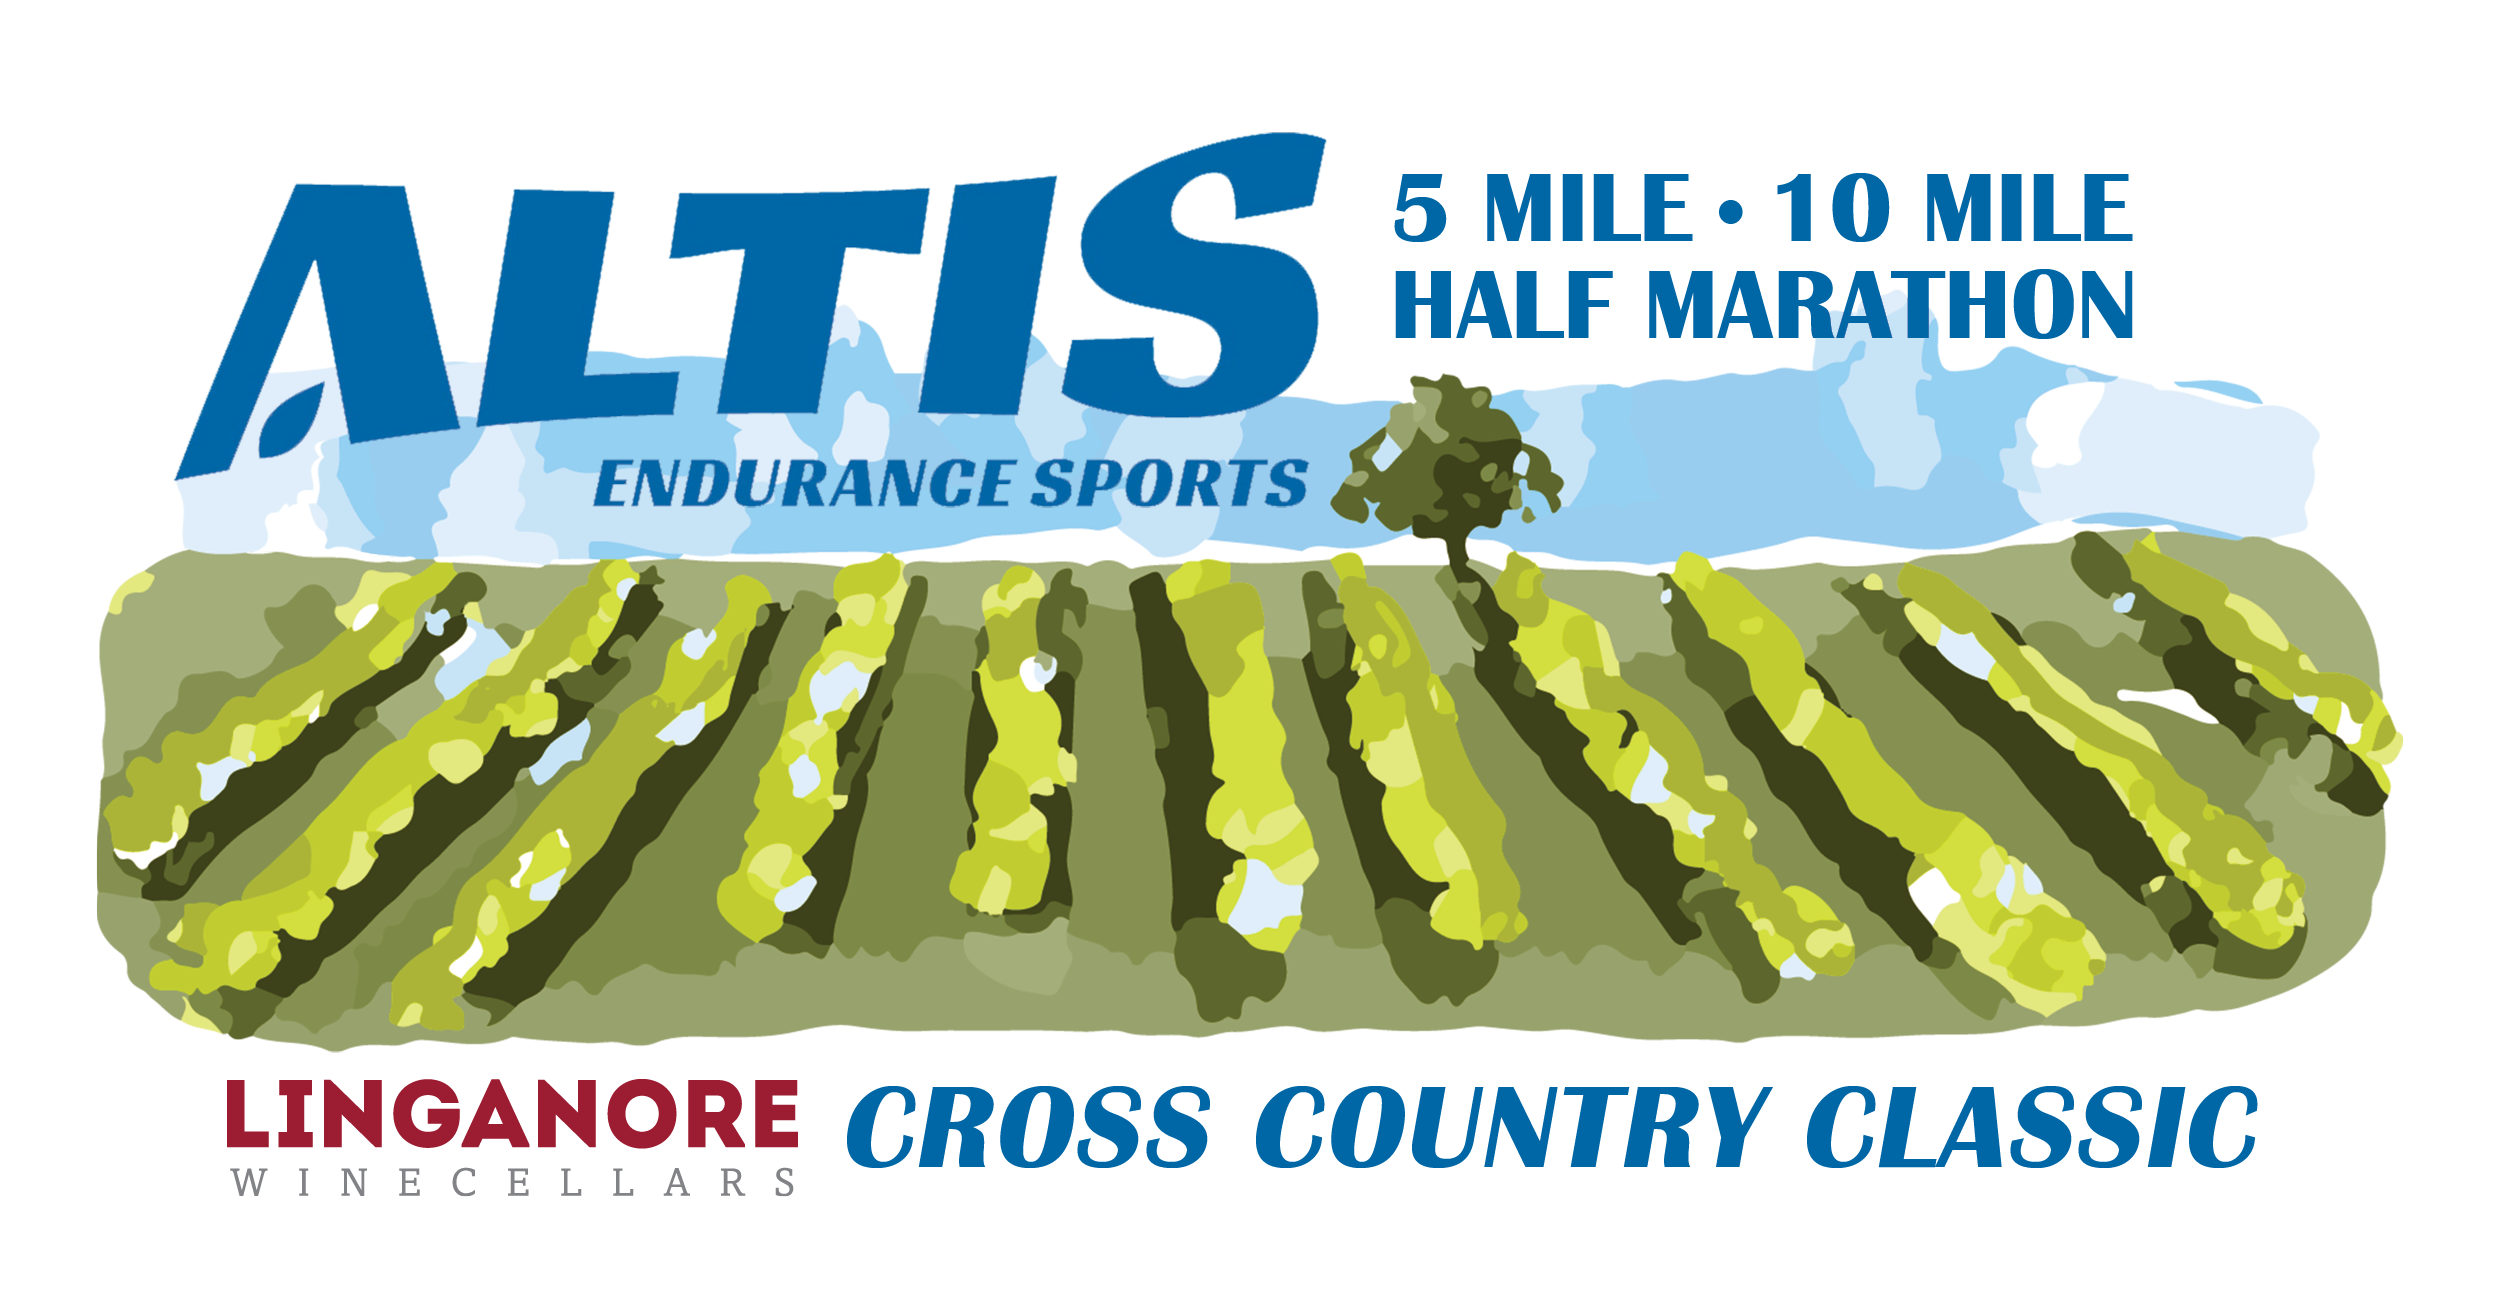 Atlis endurance sports logo